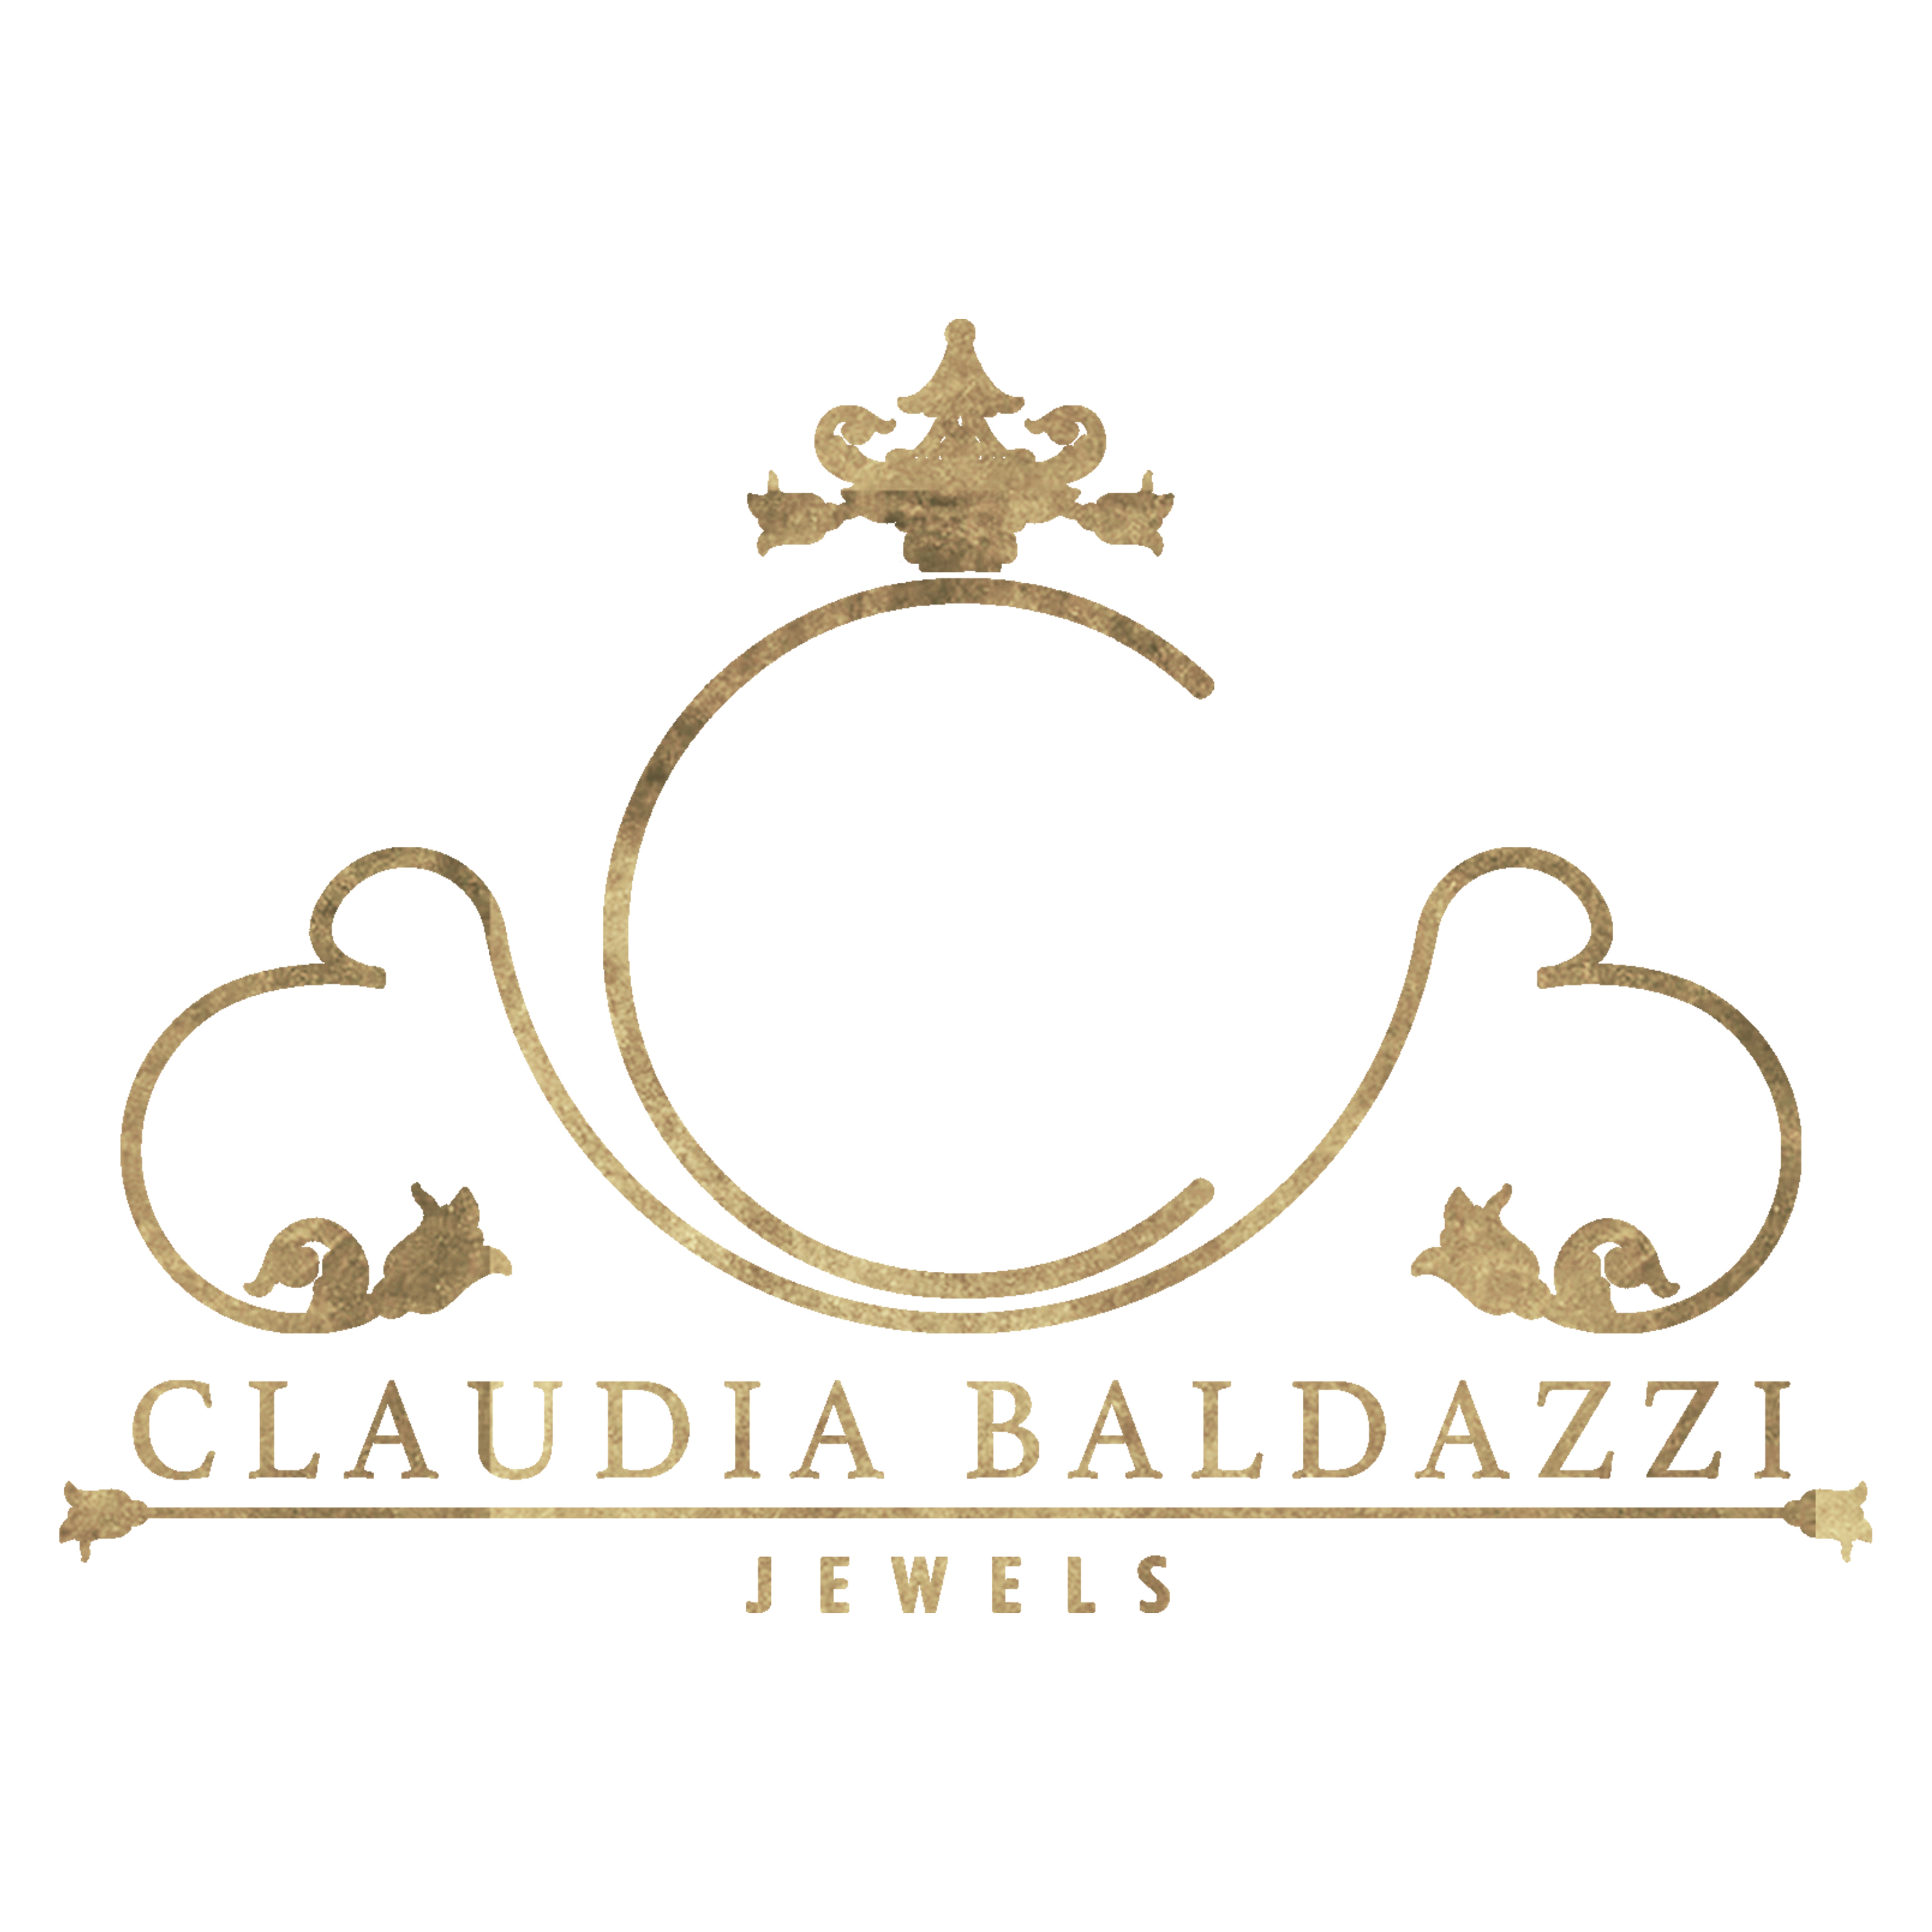 Claudia Baldazzi Jewels